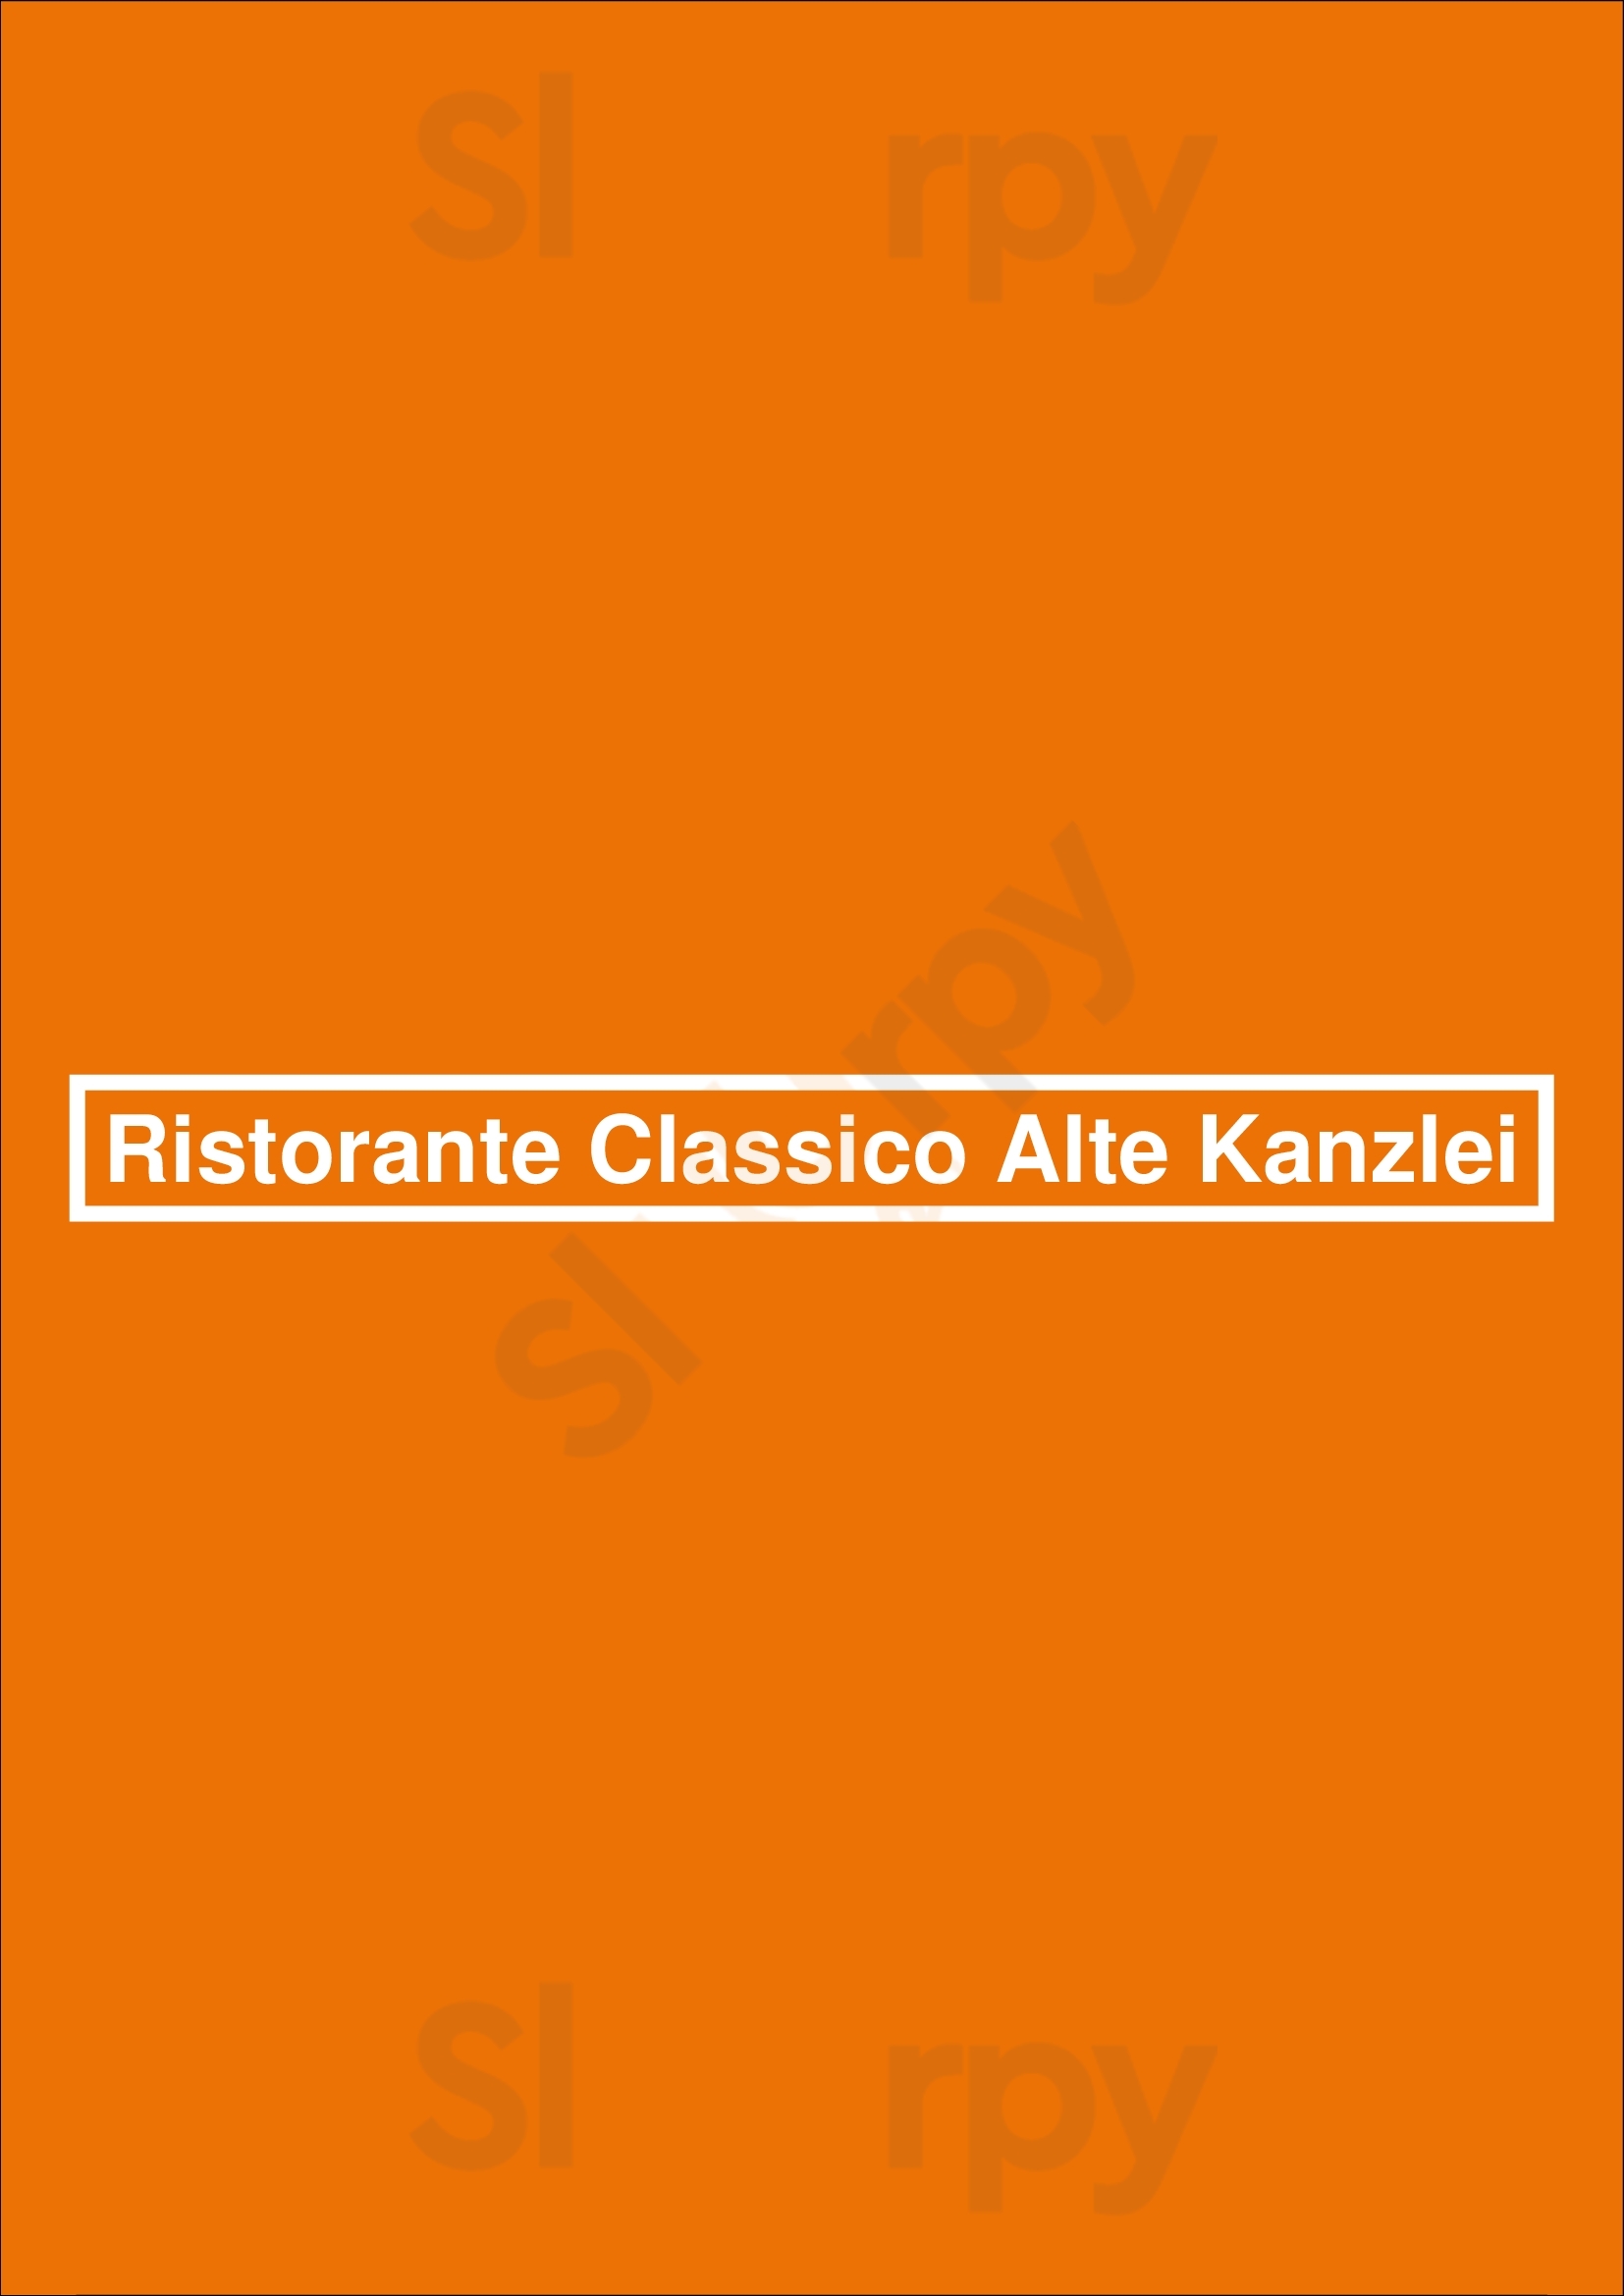 Ristorante Classico Alte Kanzlei Frankfurt am Main Menu - 1